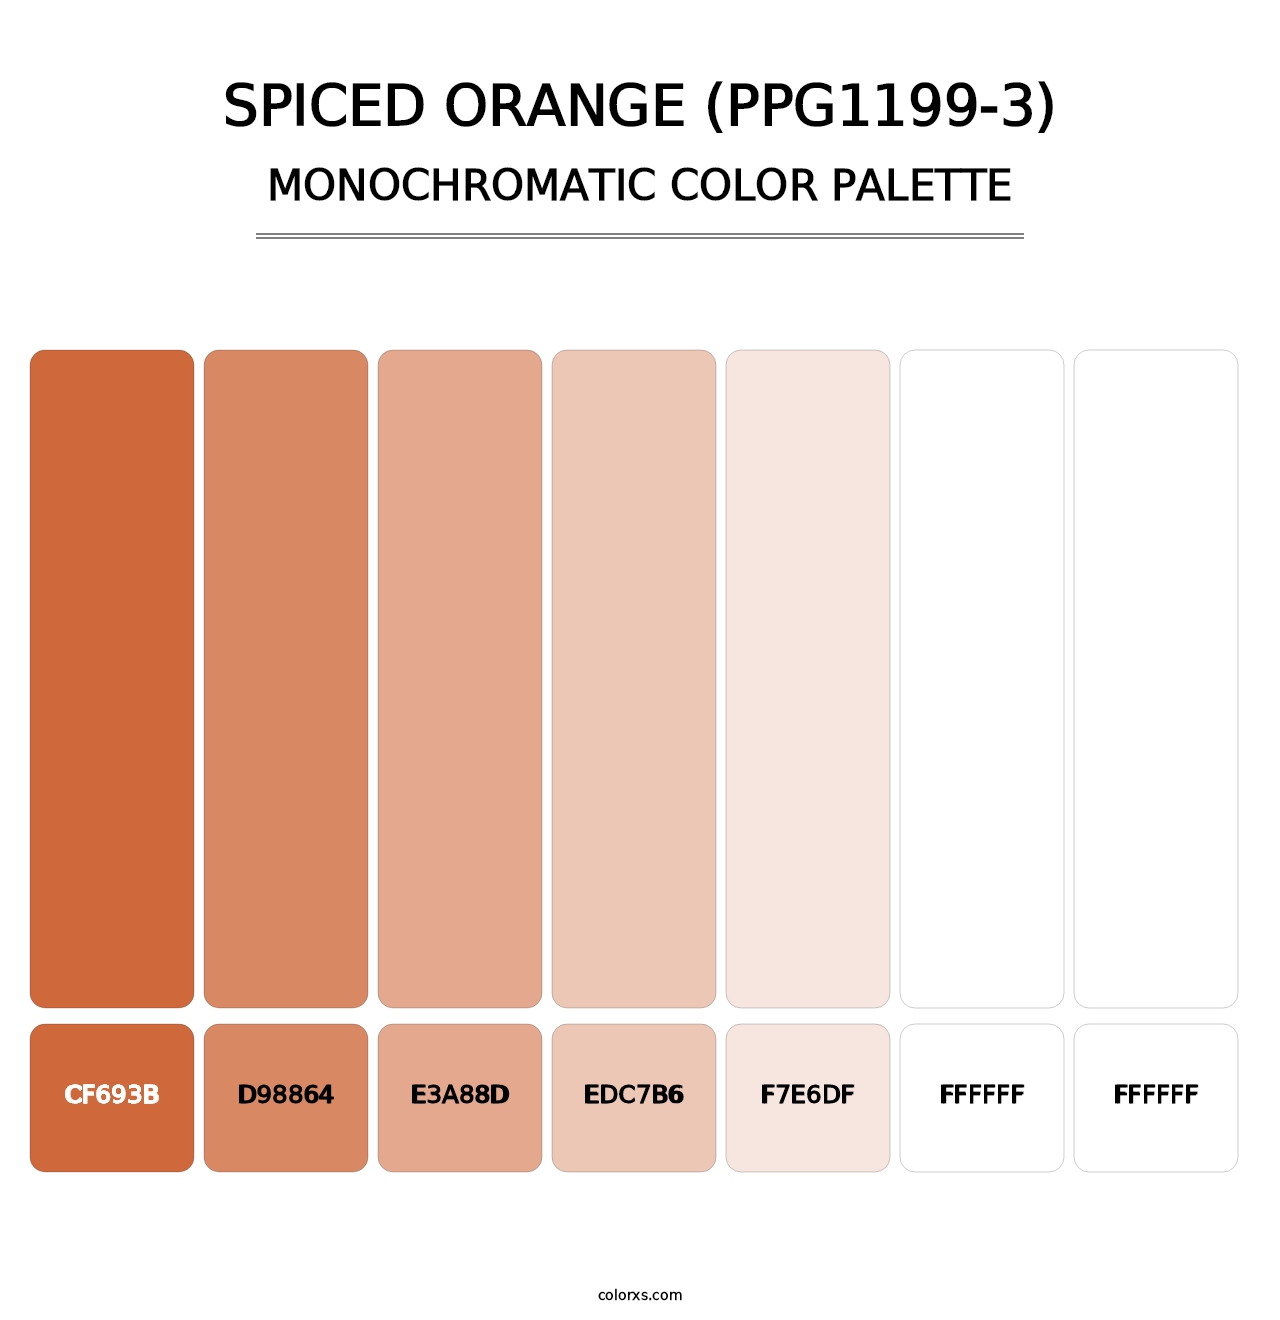 Spiced Orange (PPG1199-3) - Monochromatic Color Palette